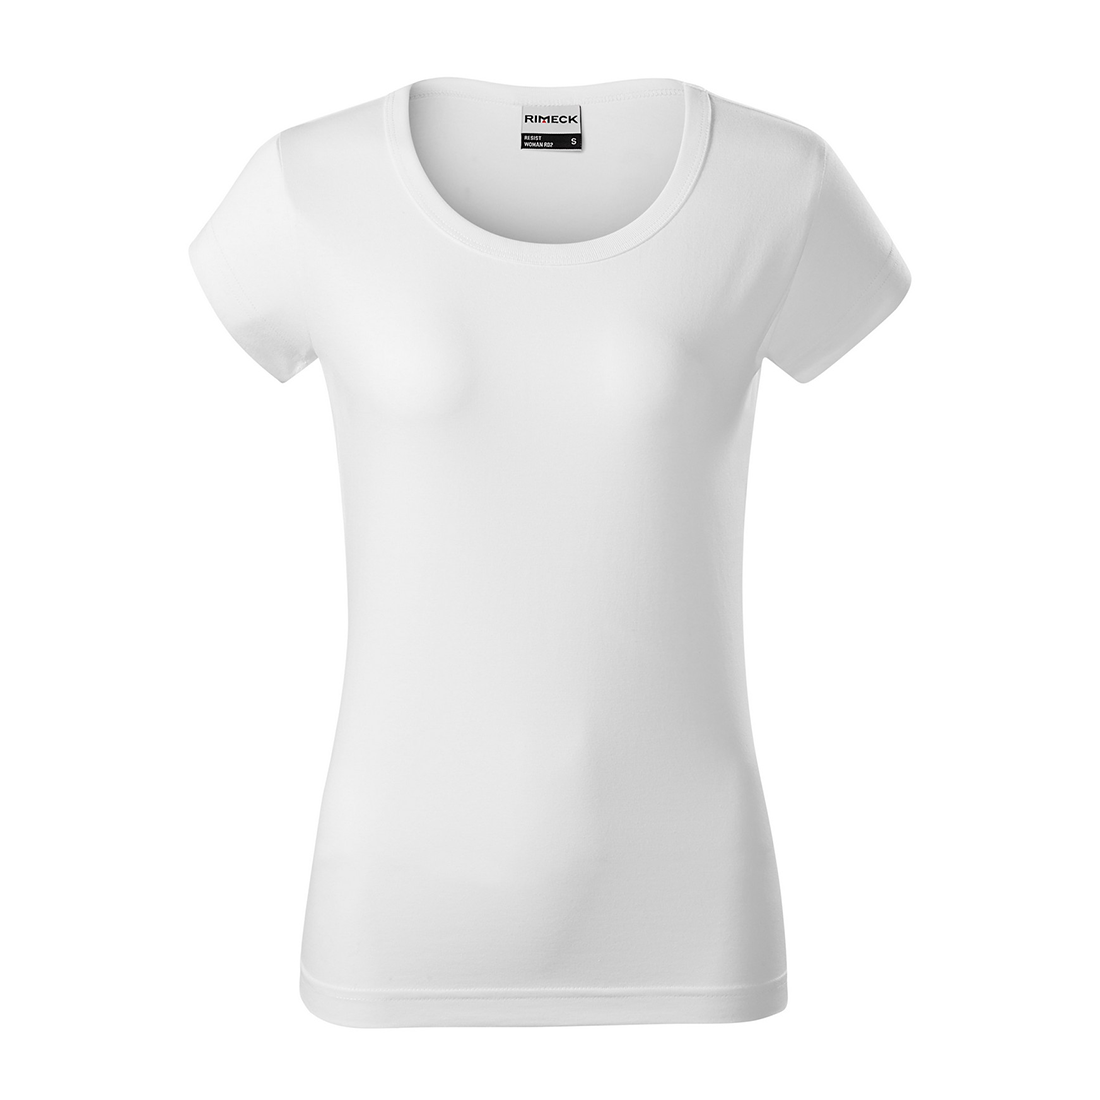 Women's Pre-shrunk Cotton T-shirt - Safetywear